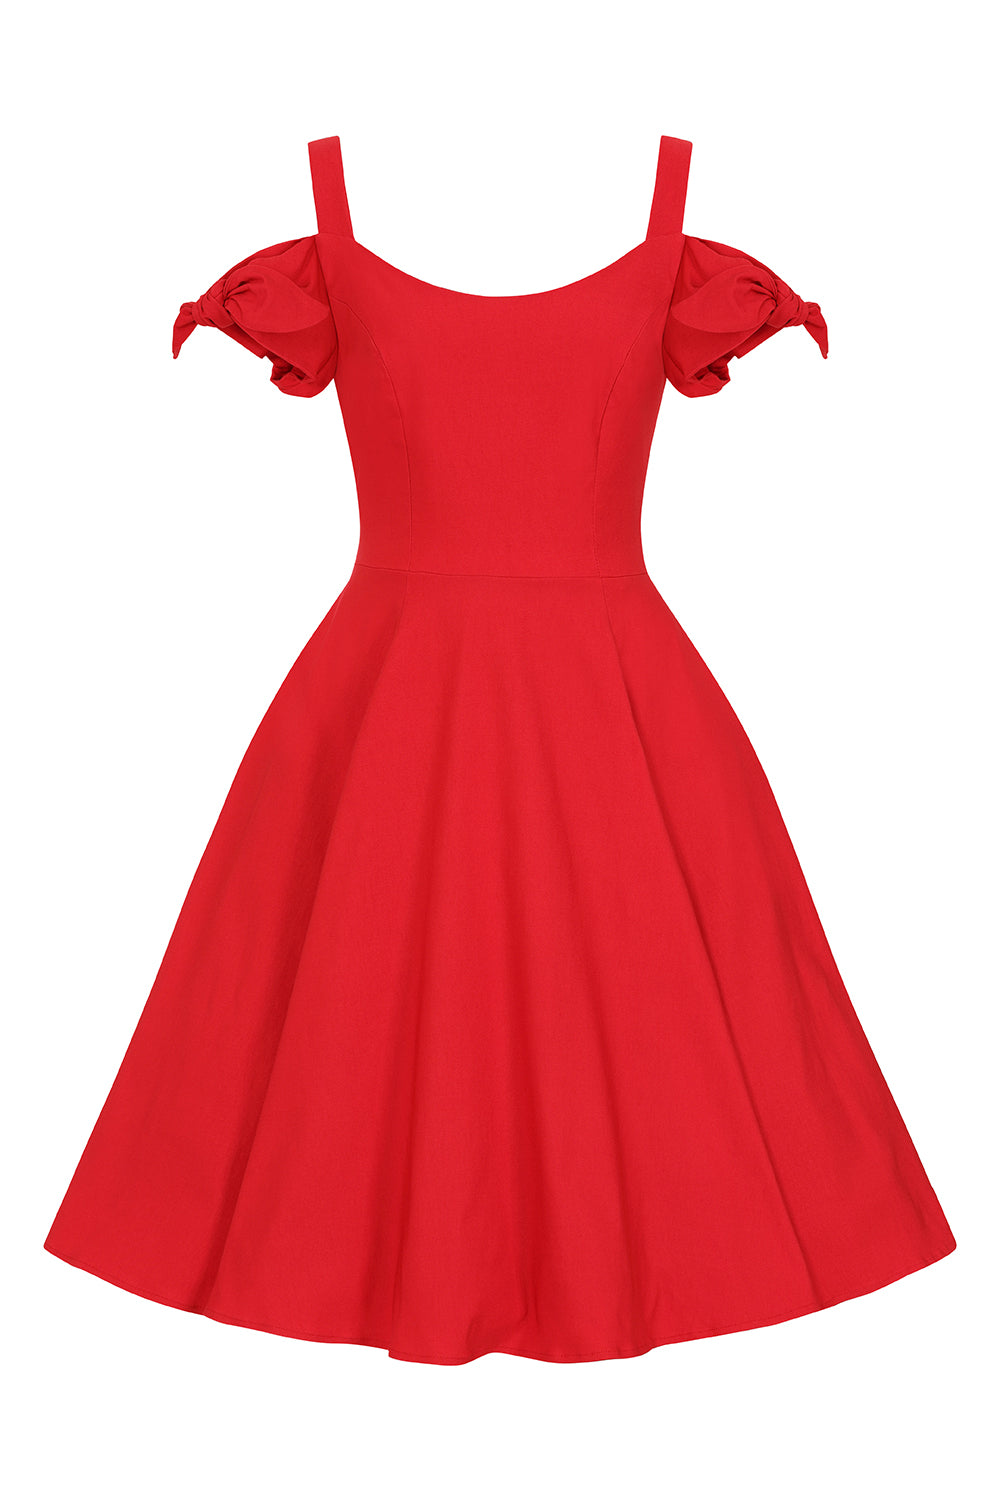 Nancy Dress in Red by Hell Bunny